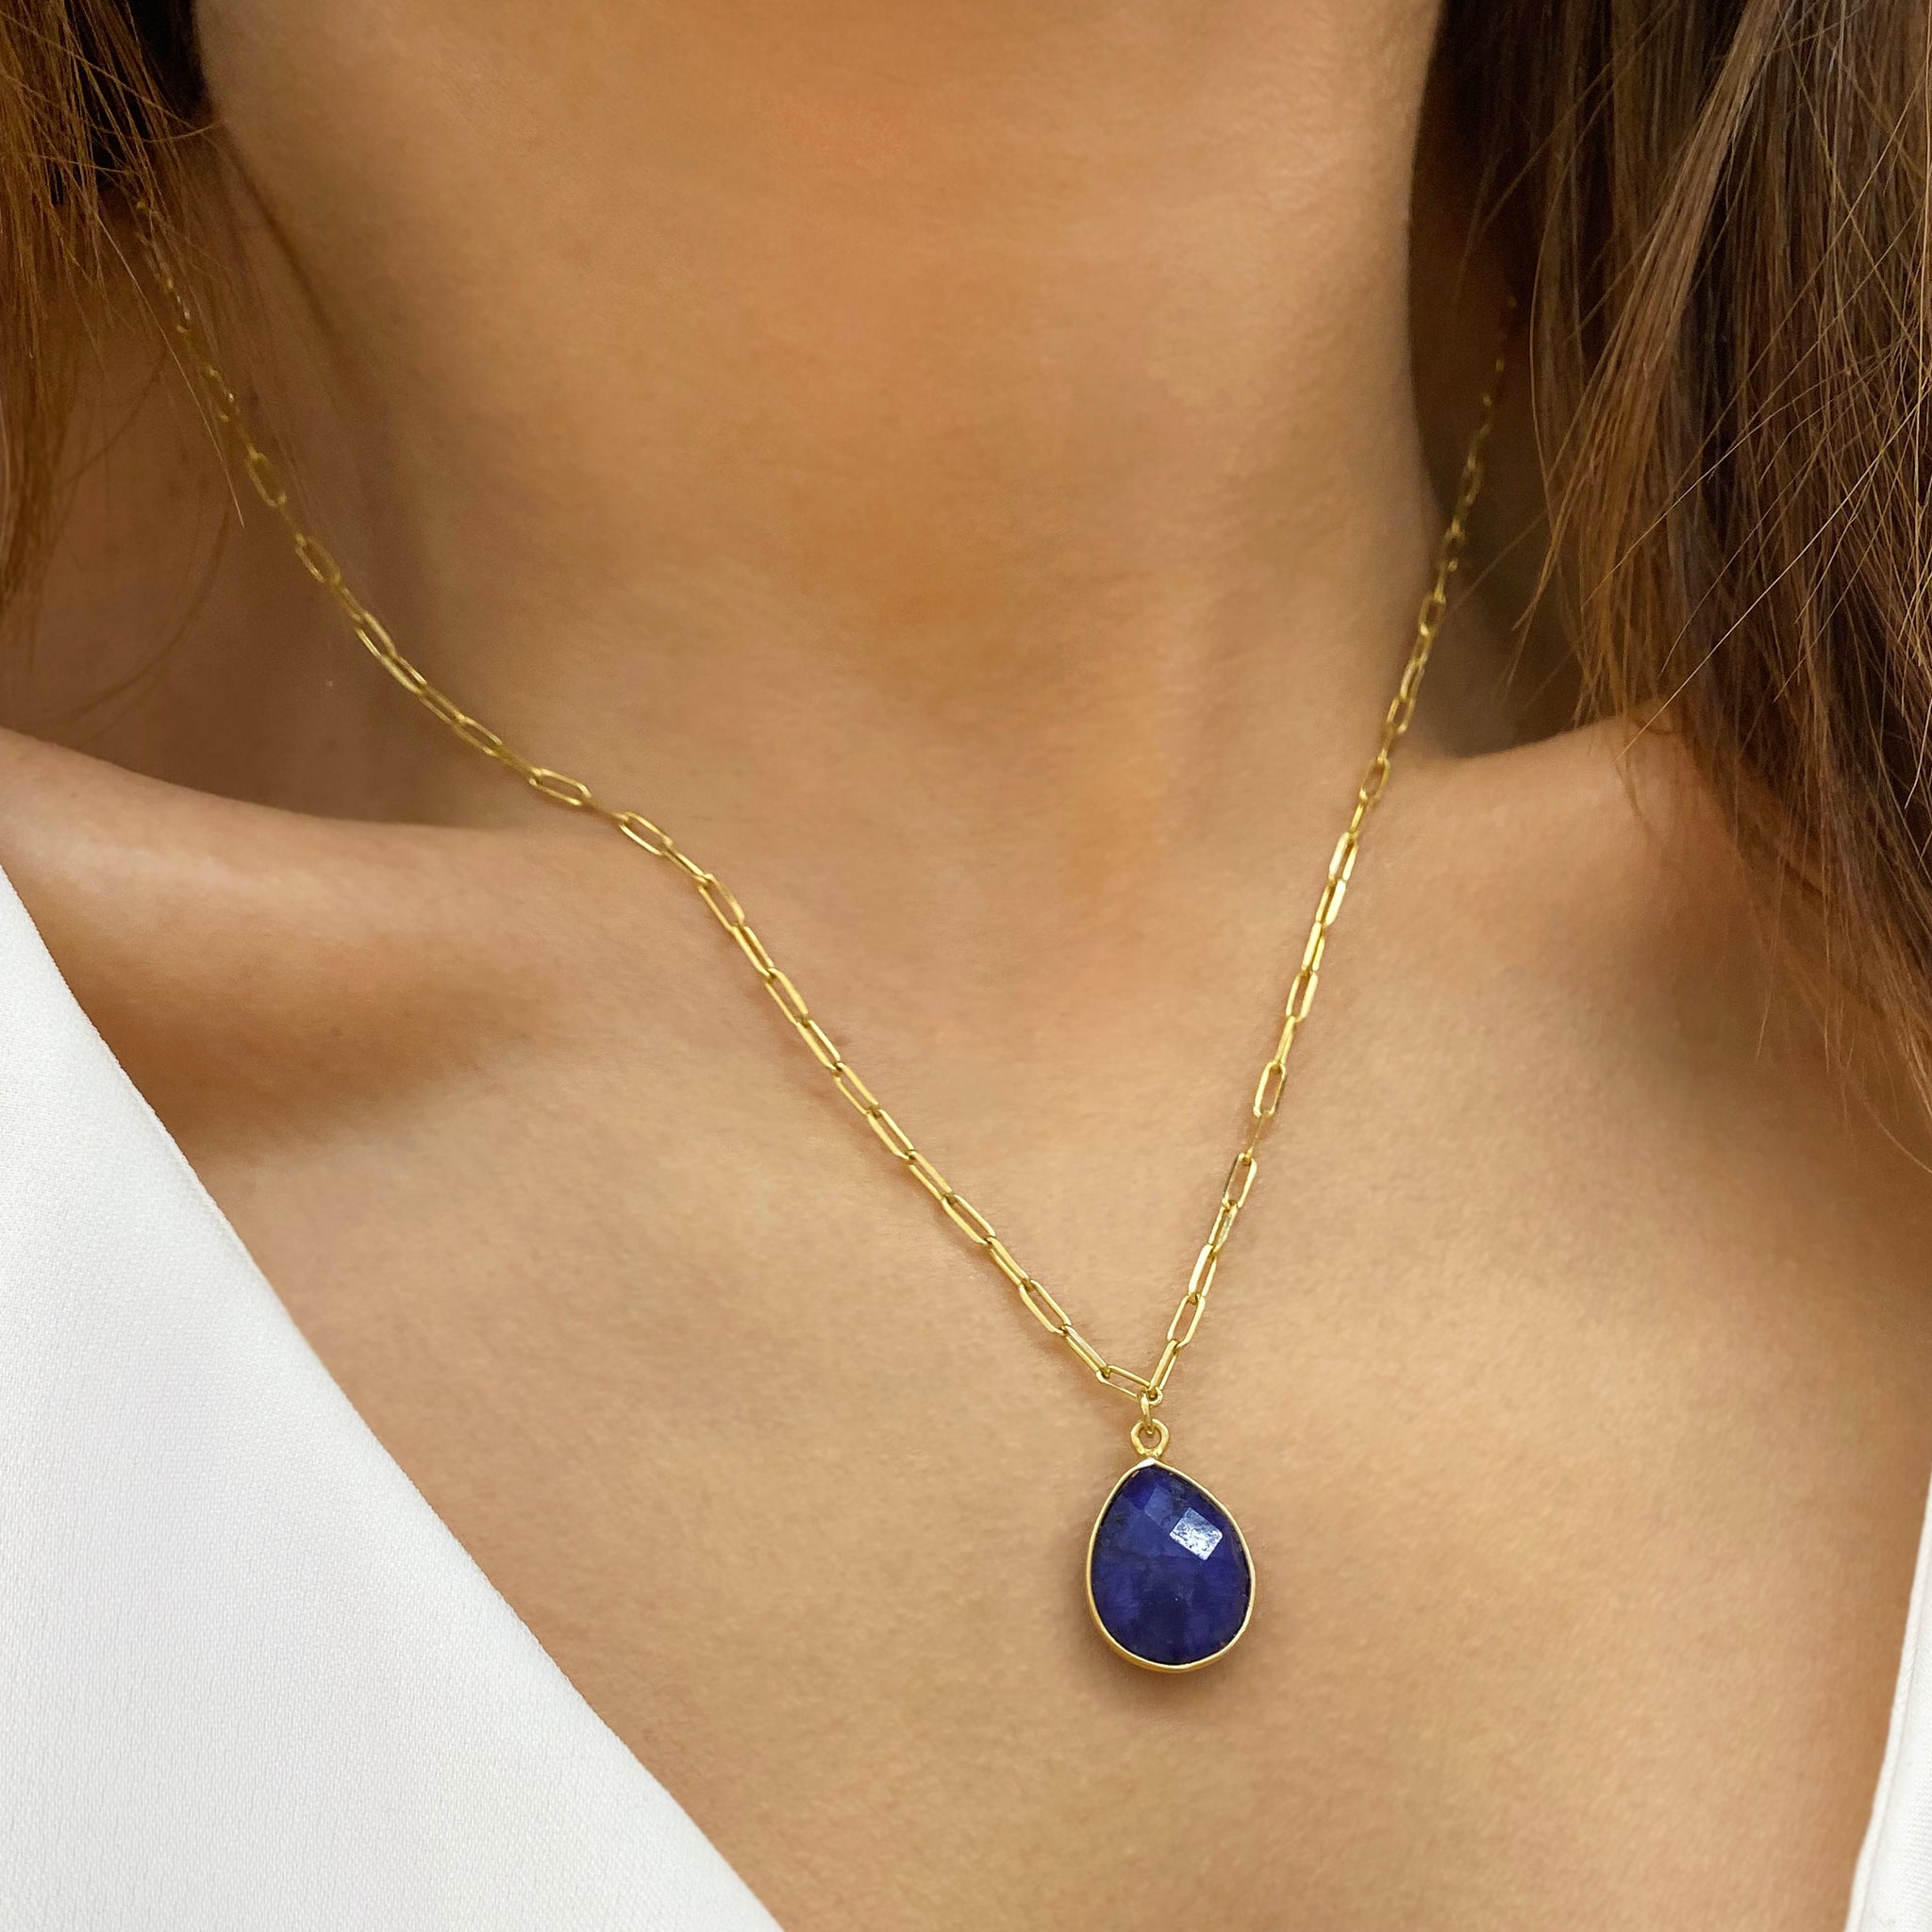 Shop Genuine Blue Sapphire Dainty Pendant in 14K Solid Gold Online